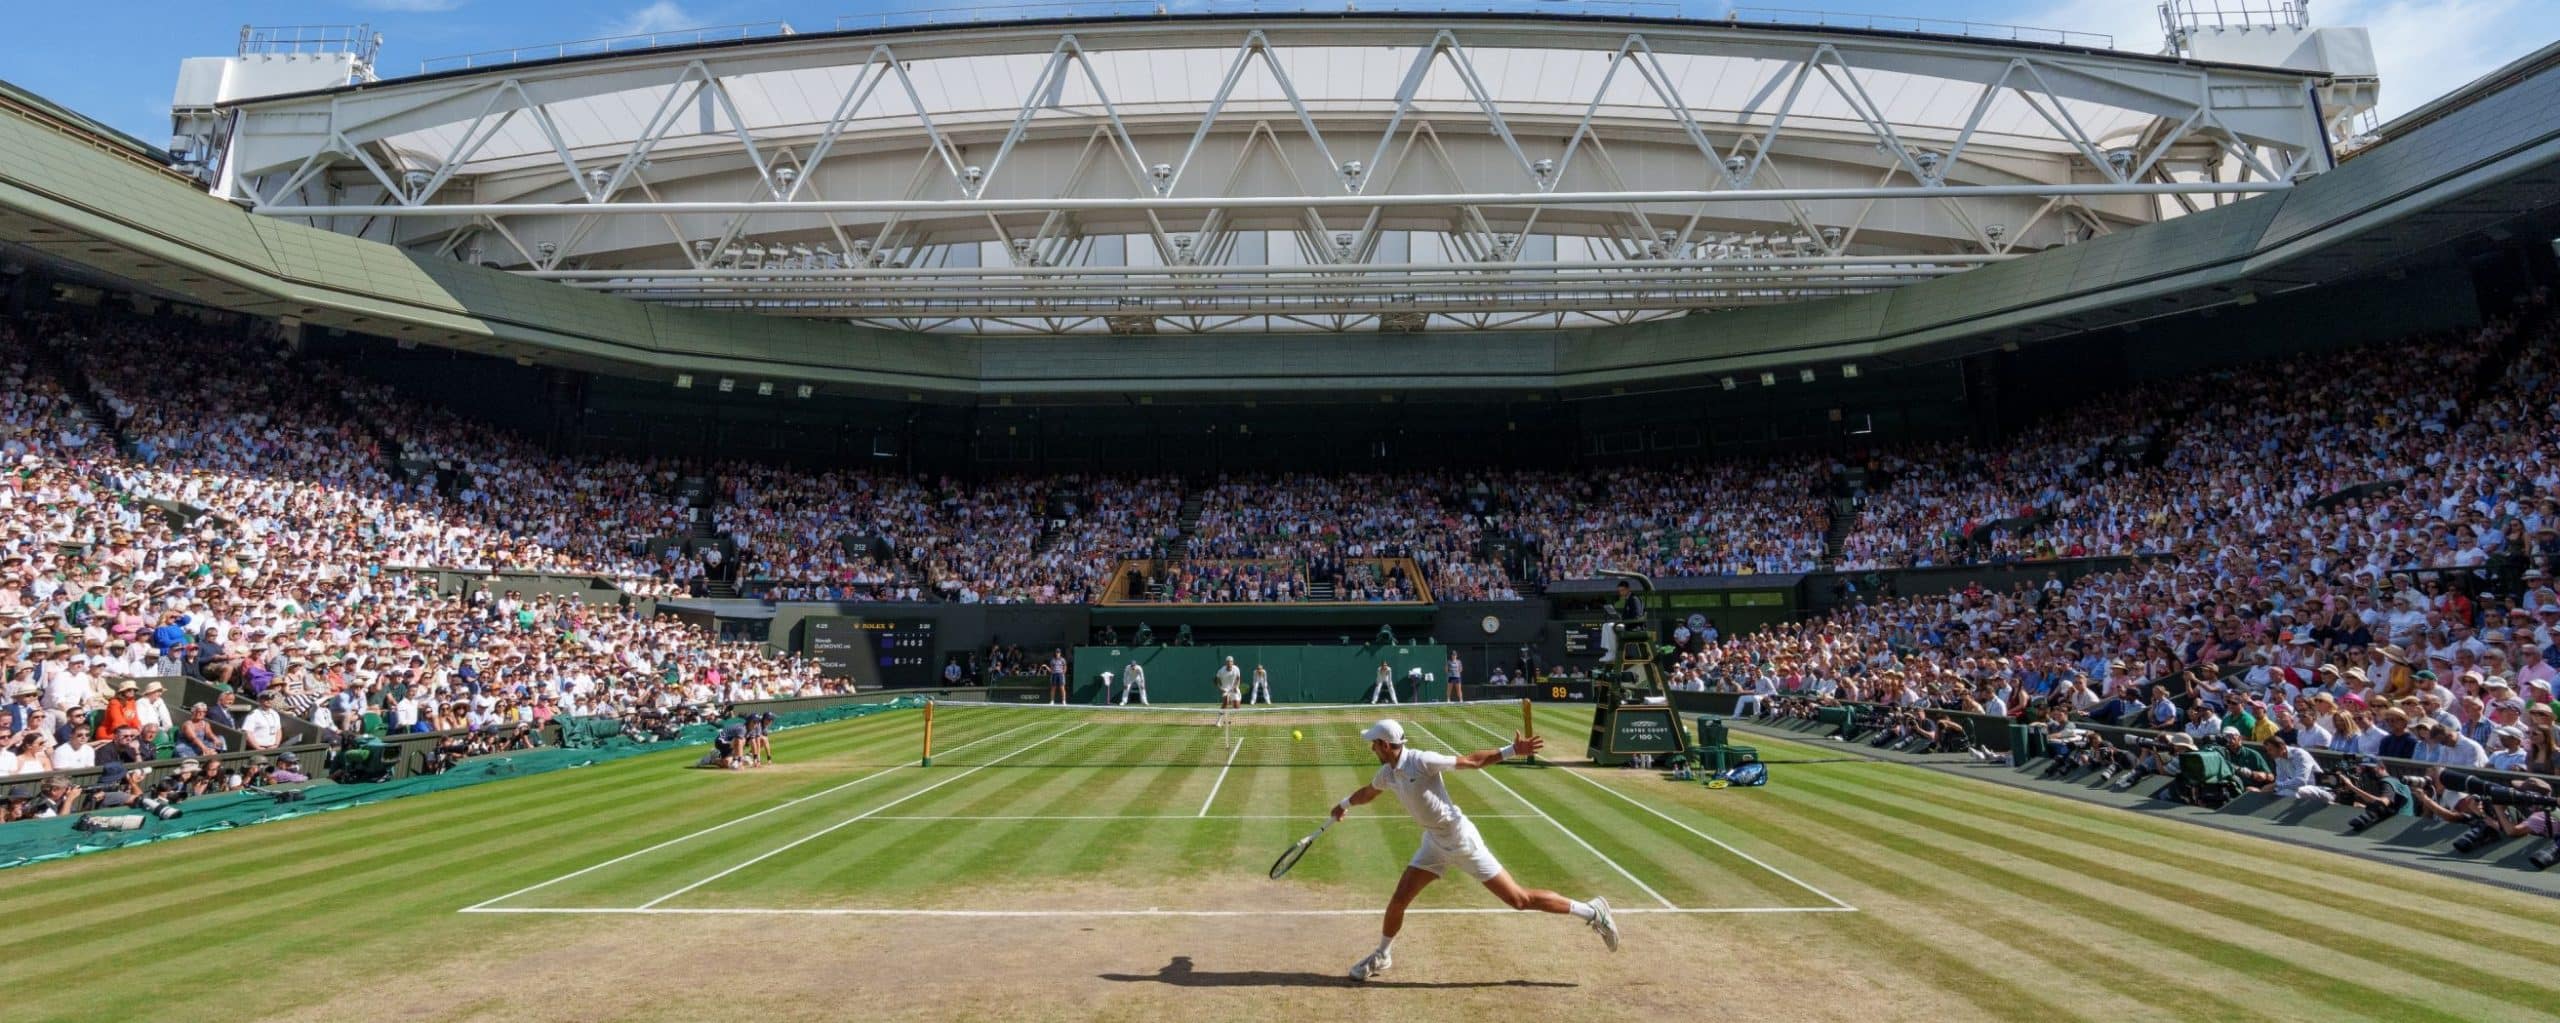 view of Wimbledon arena with tennis player